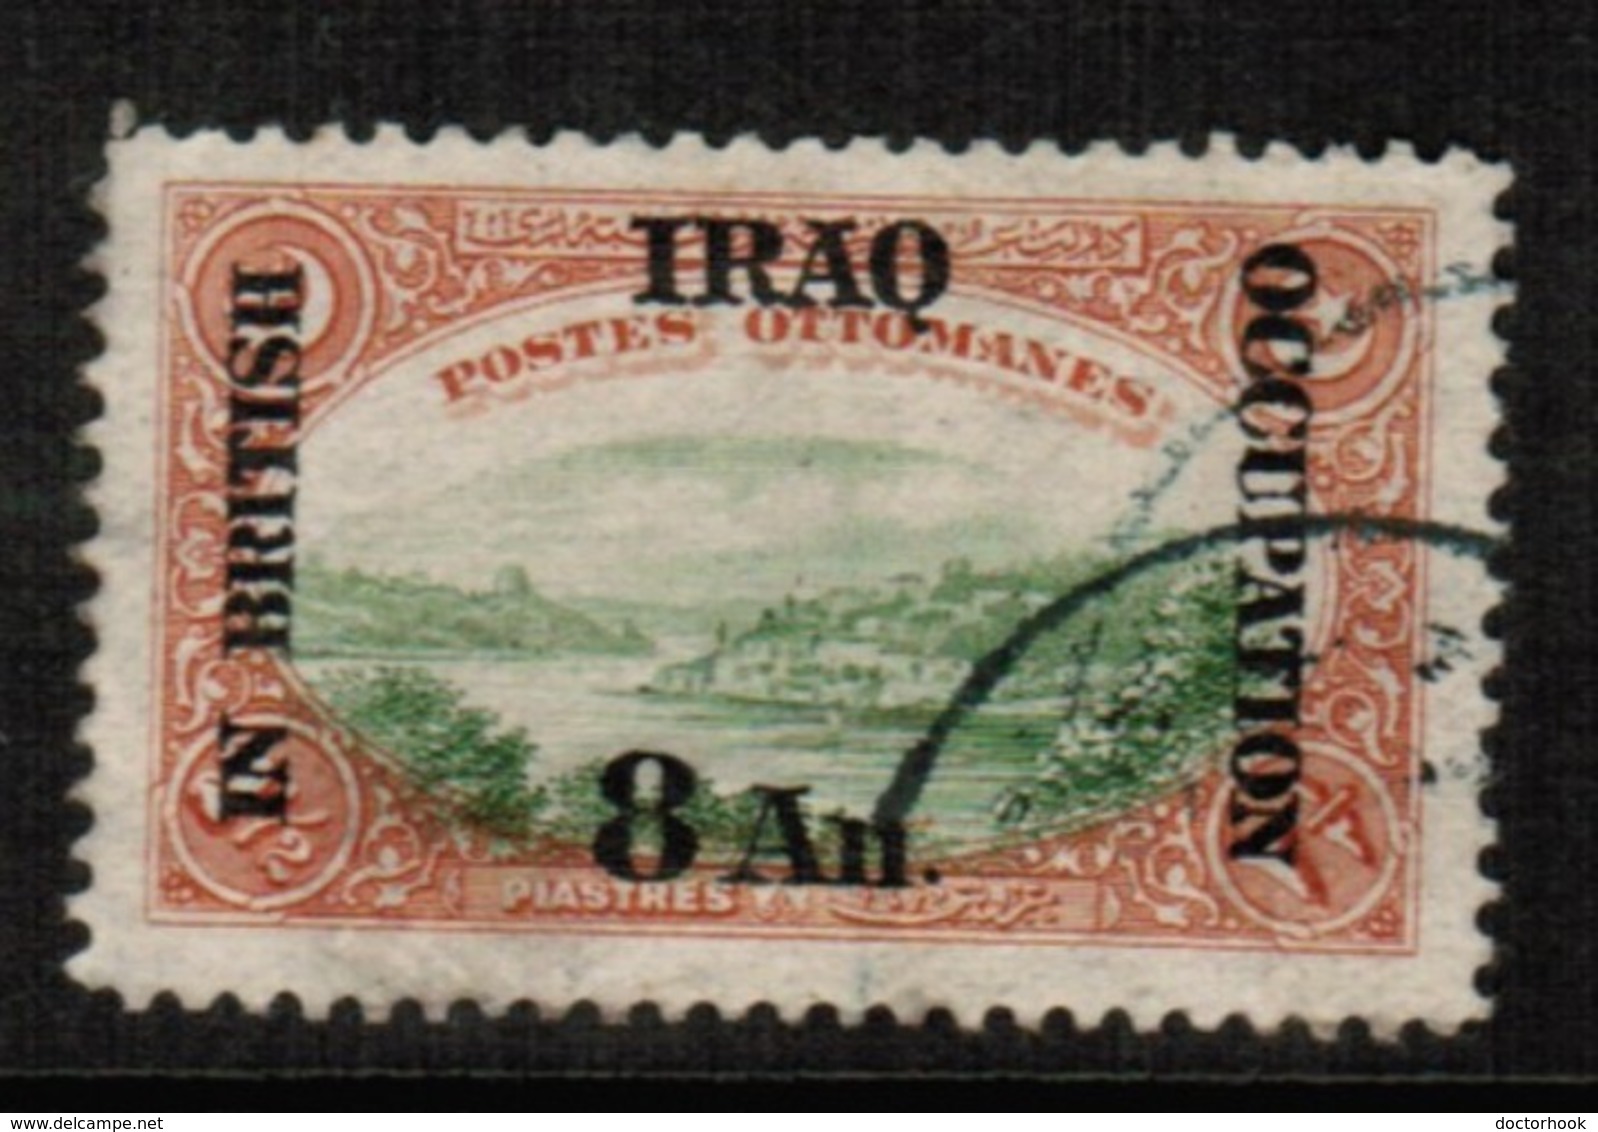 MESOPOTAMIA  Scott # N 36 VF USED (Stamp Scan # 480) - Iraq